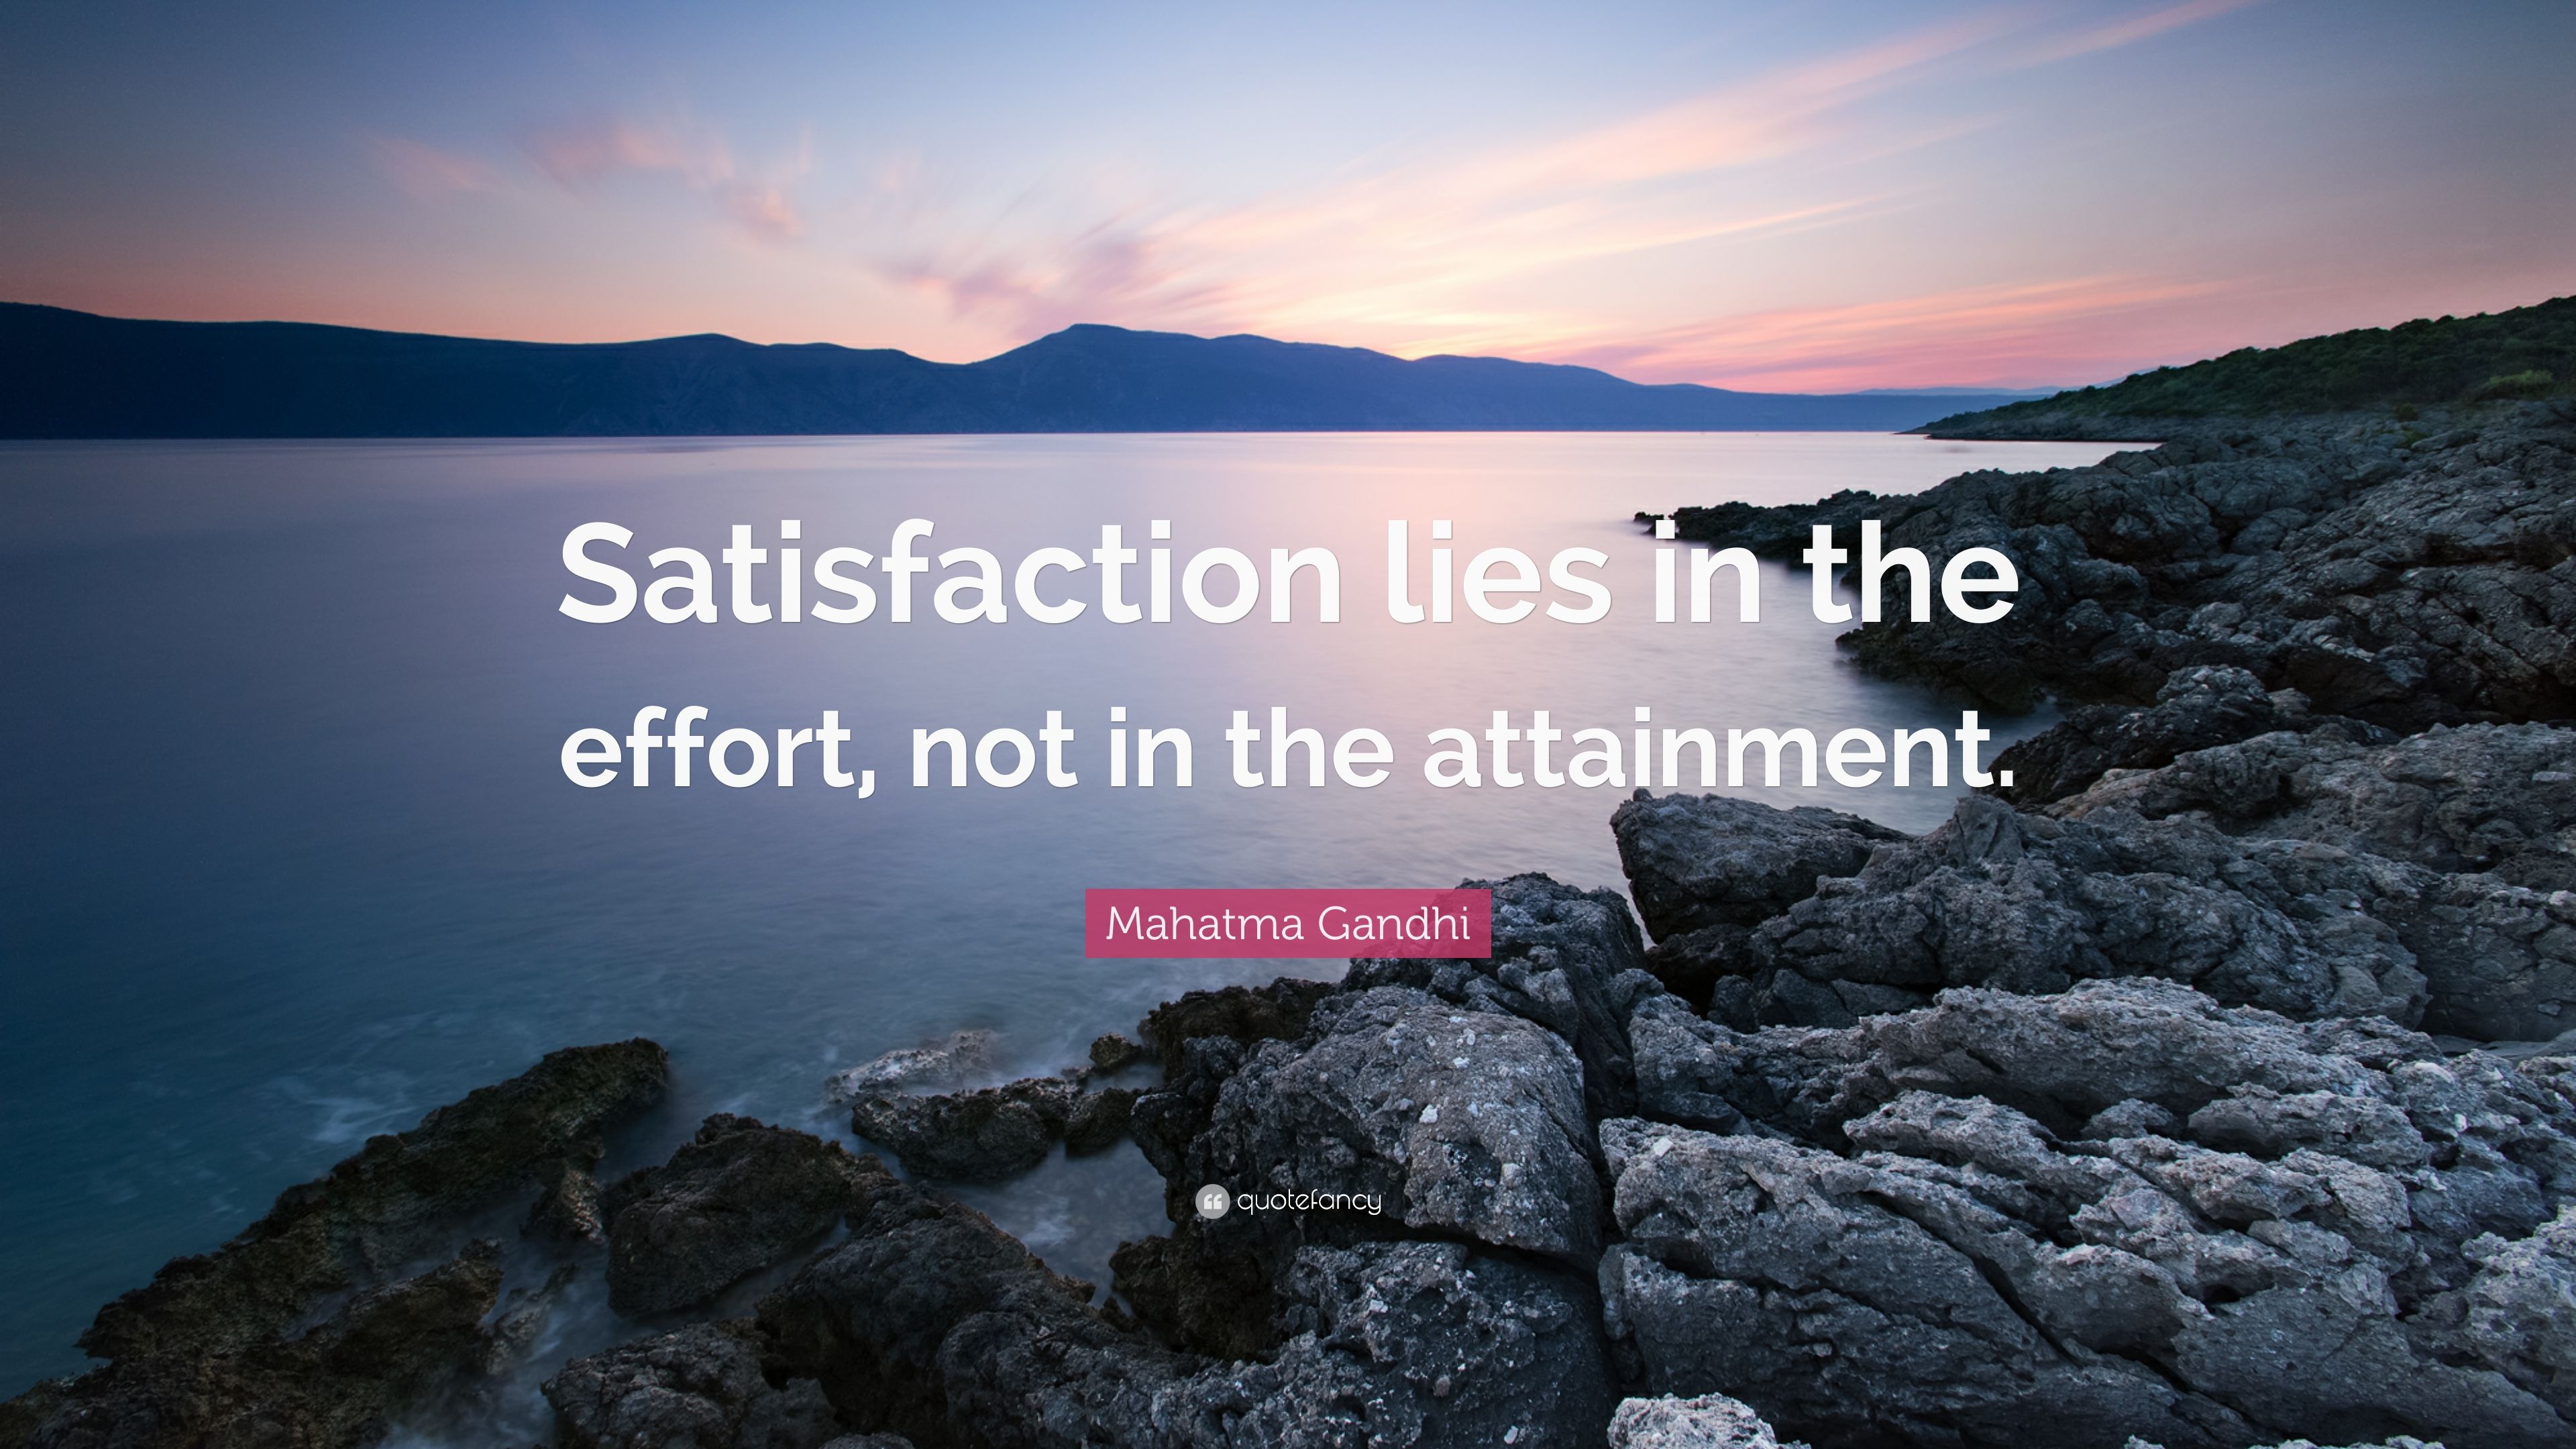 Mahatma Gandhi Quote: “Satisfaction lies in the effort, not in the attainment.” (7 wallpaper)